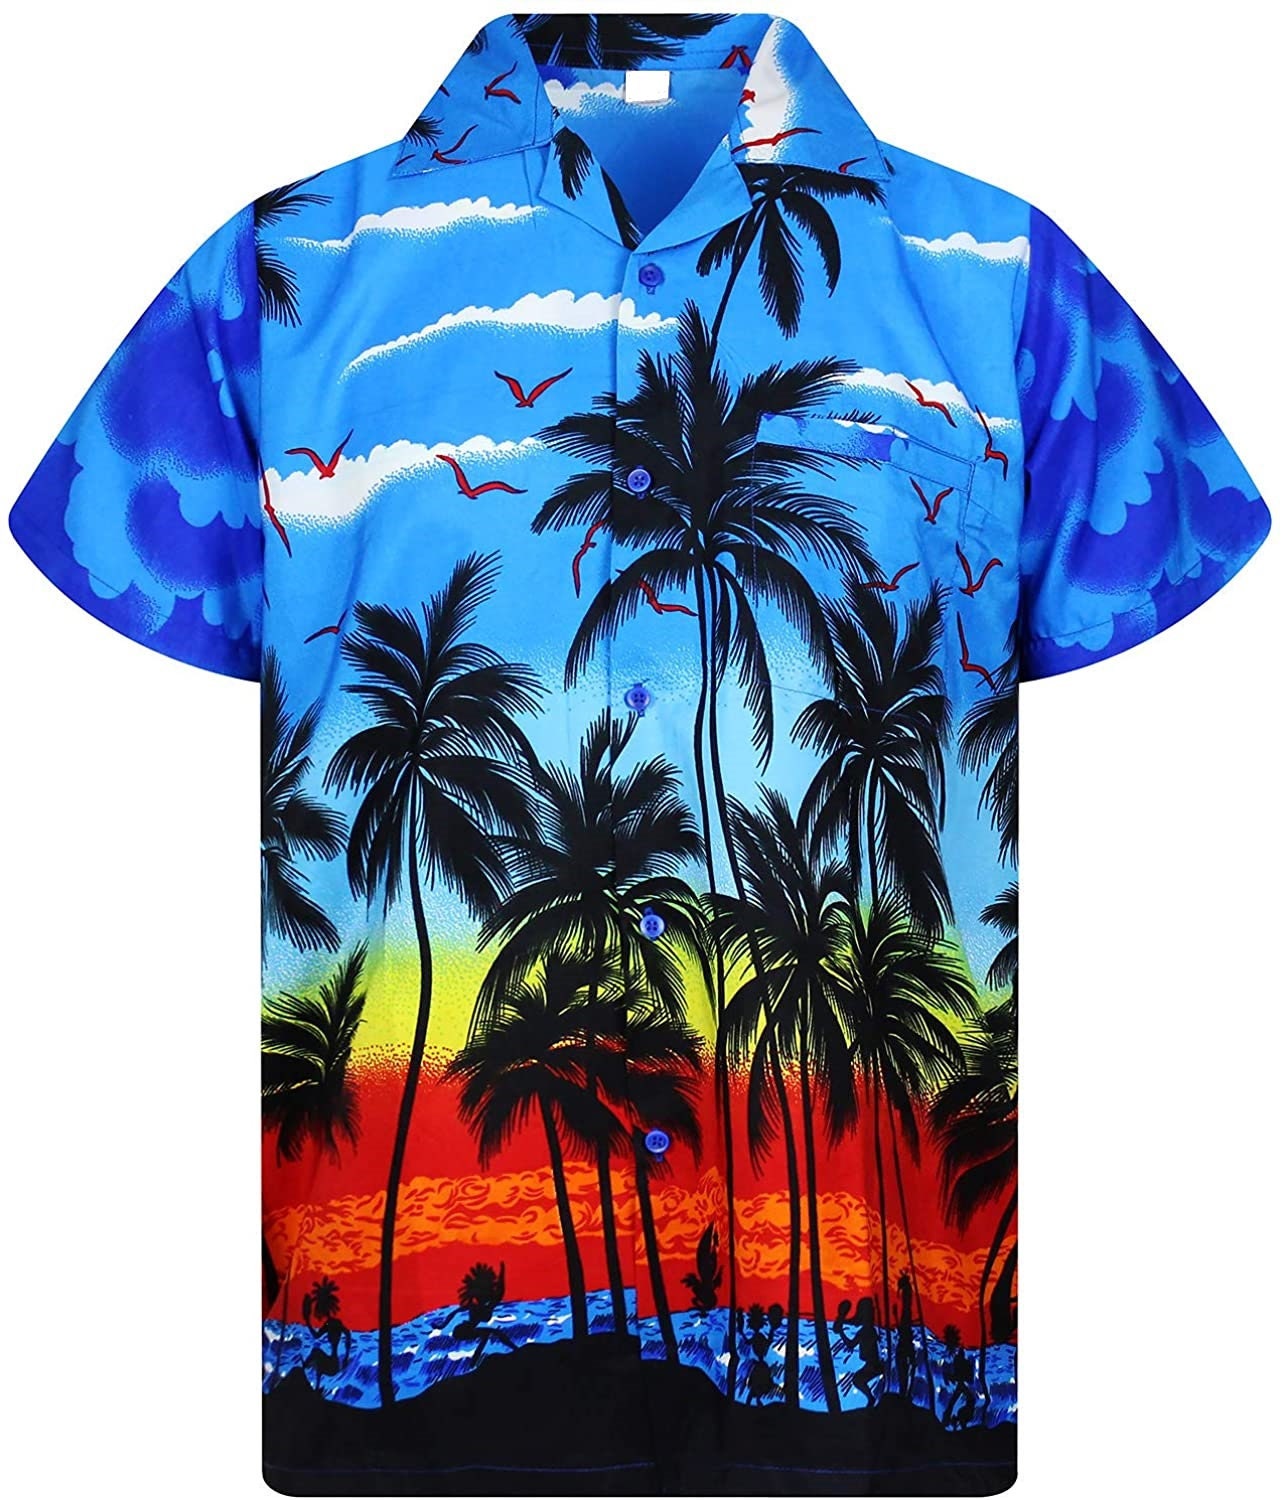 NHL Vegas Golden Knights Coconut Tree Beach Aloha Shirt - Torunstyle